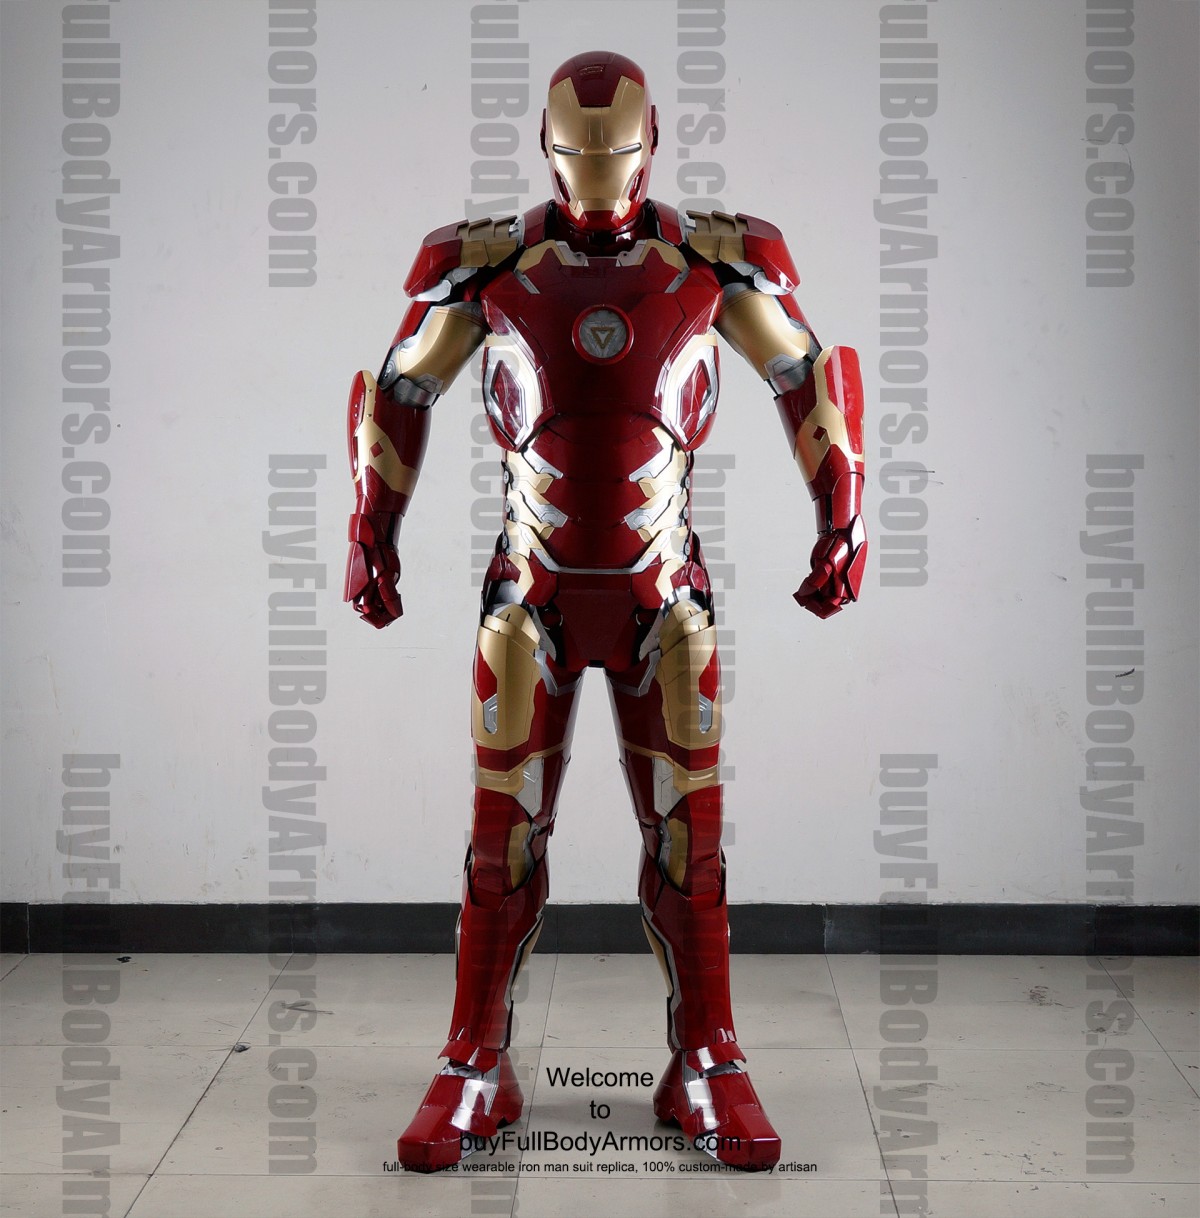 Inocente Bangladesh Incompatible Buy Iron Man suit, Halo Master Chief armor, Batman costume, Star Wars armor  | Buy the Wearable Iron Man Mark 43 (XLIII) suit costume armor  BuyFullBodyArmors.com